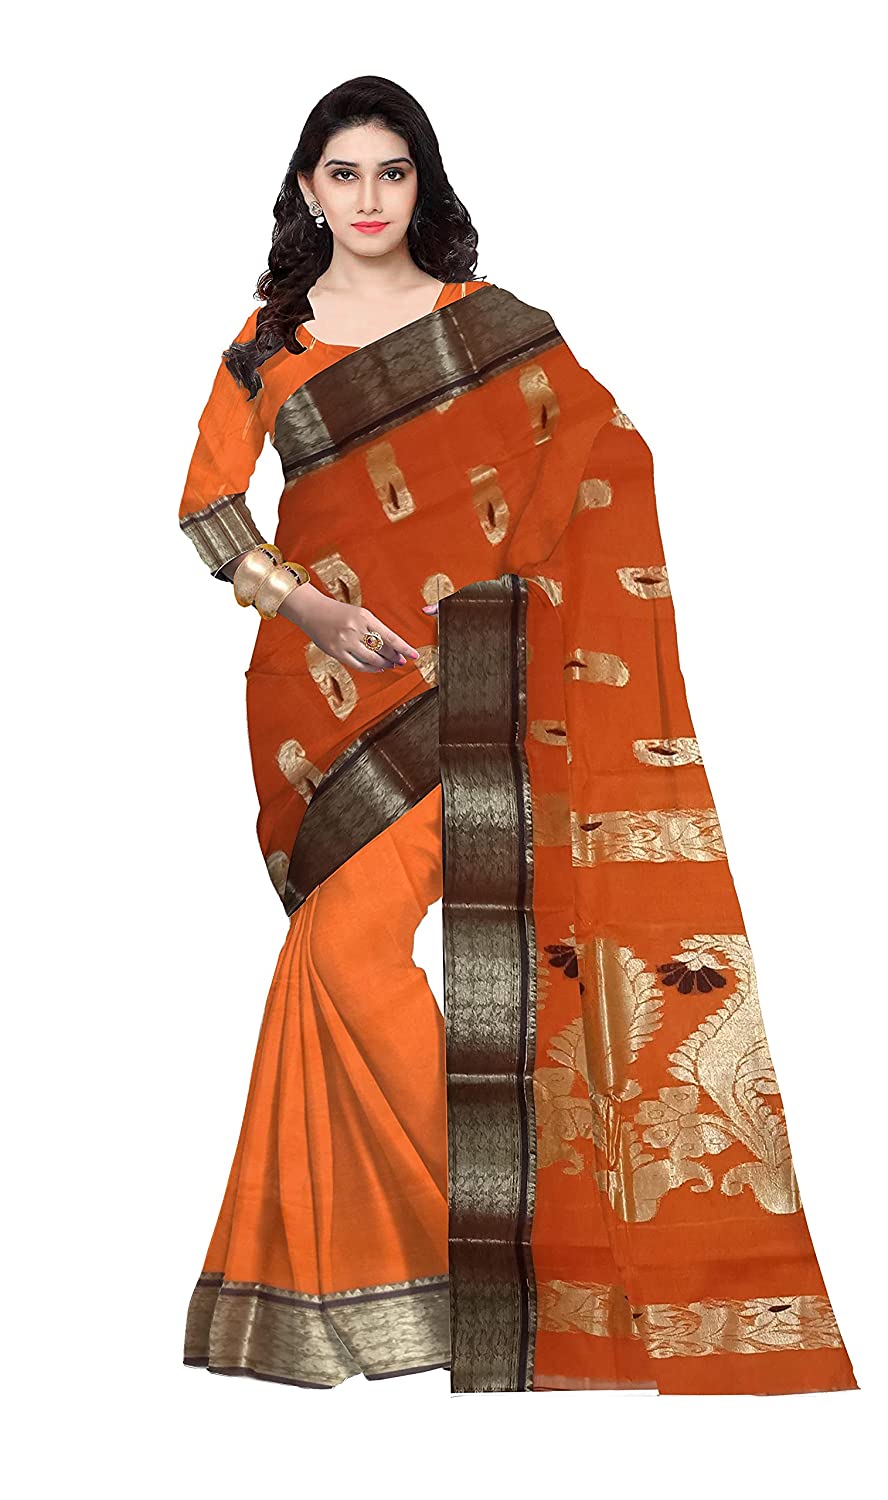 Pradip Fabrics Ethnic Women's Tant Cotton Silk Maroon color Saree